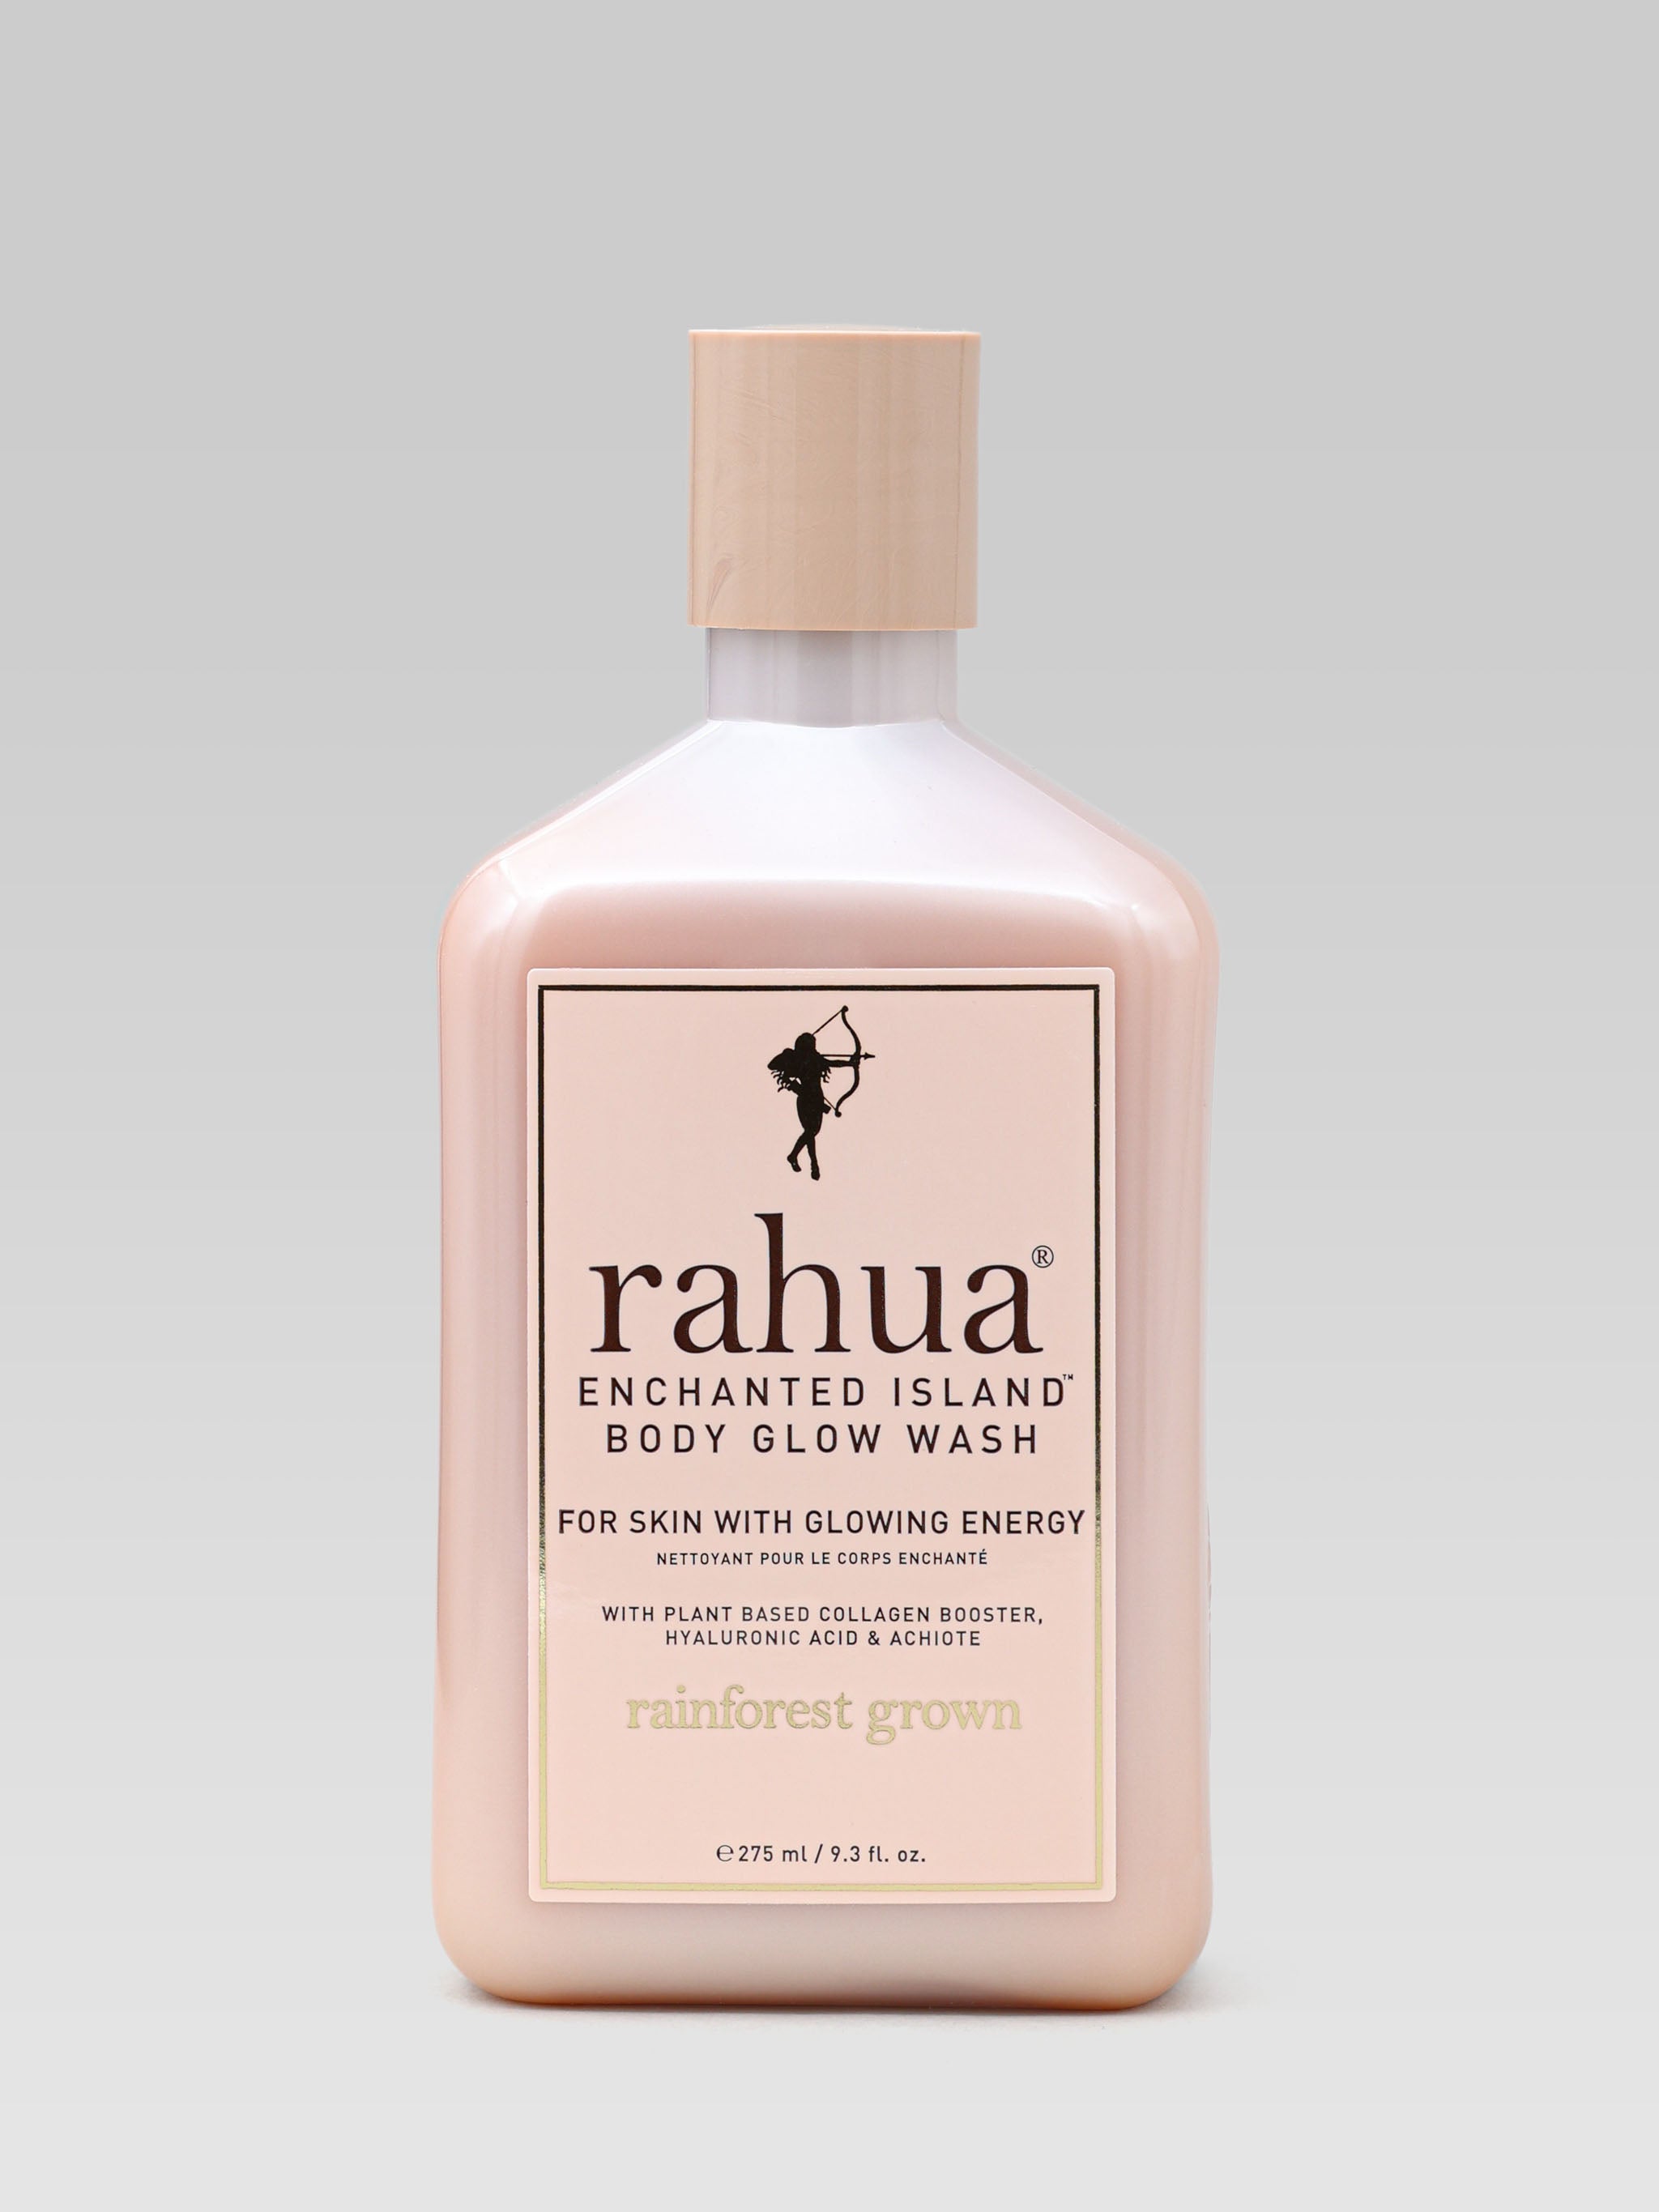 Rahua Enchanted Island Body Glow Wash product shot